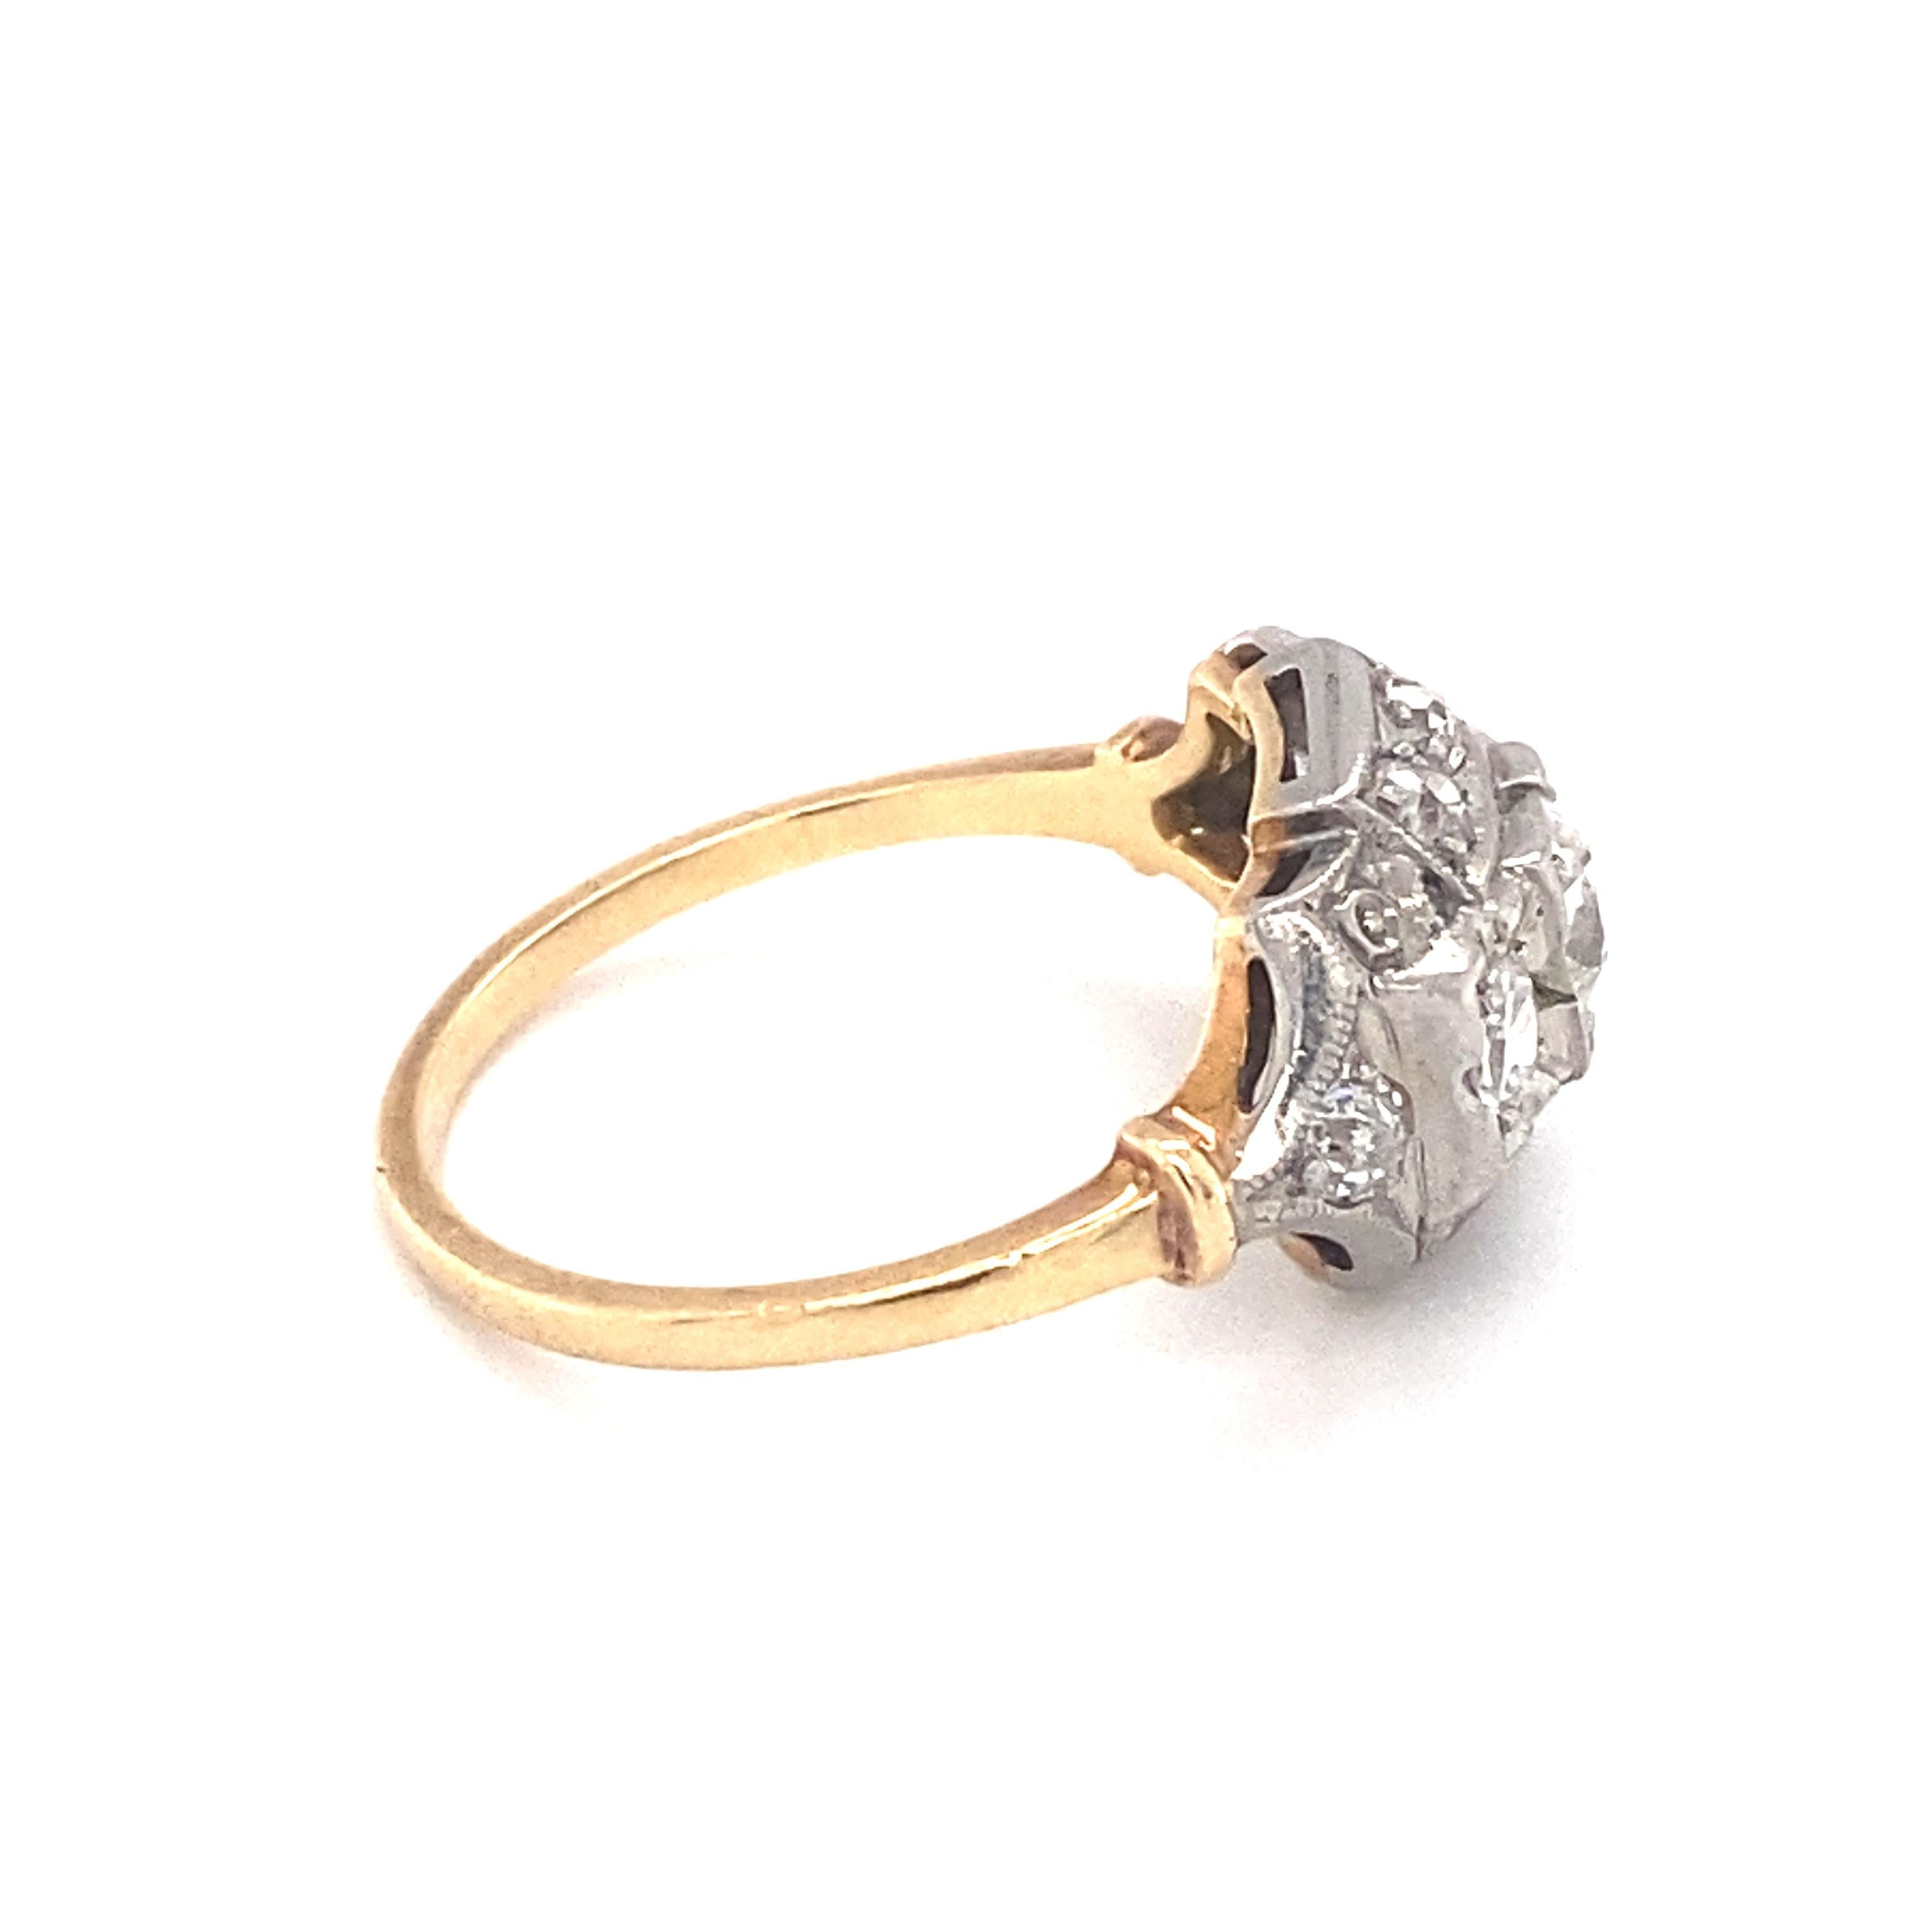 Item Details: This Art Deco ring has Old European cut diamonds totaling one carat.

Circa: 1920s
Metal Type: 14 Karat Yellow and White Gold
Weight: 3.3 grams
Size: US 7.25, resizable

Diamond Details:
Weight: 1.0 carat total weight
Cut: Old European